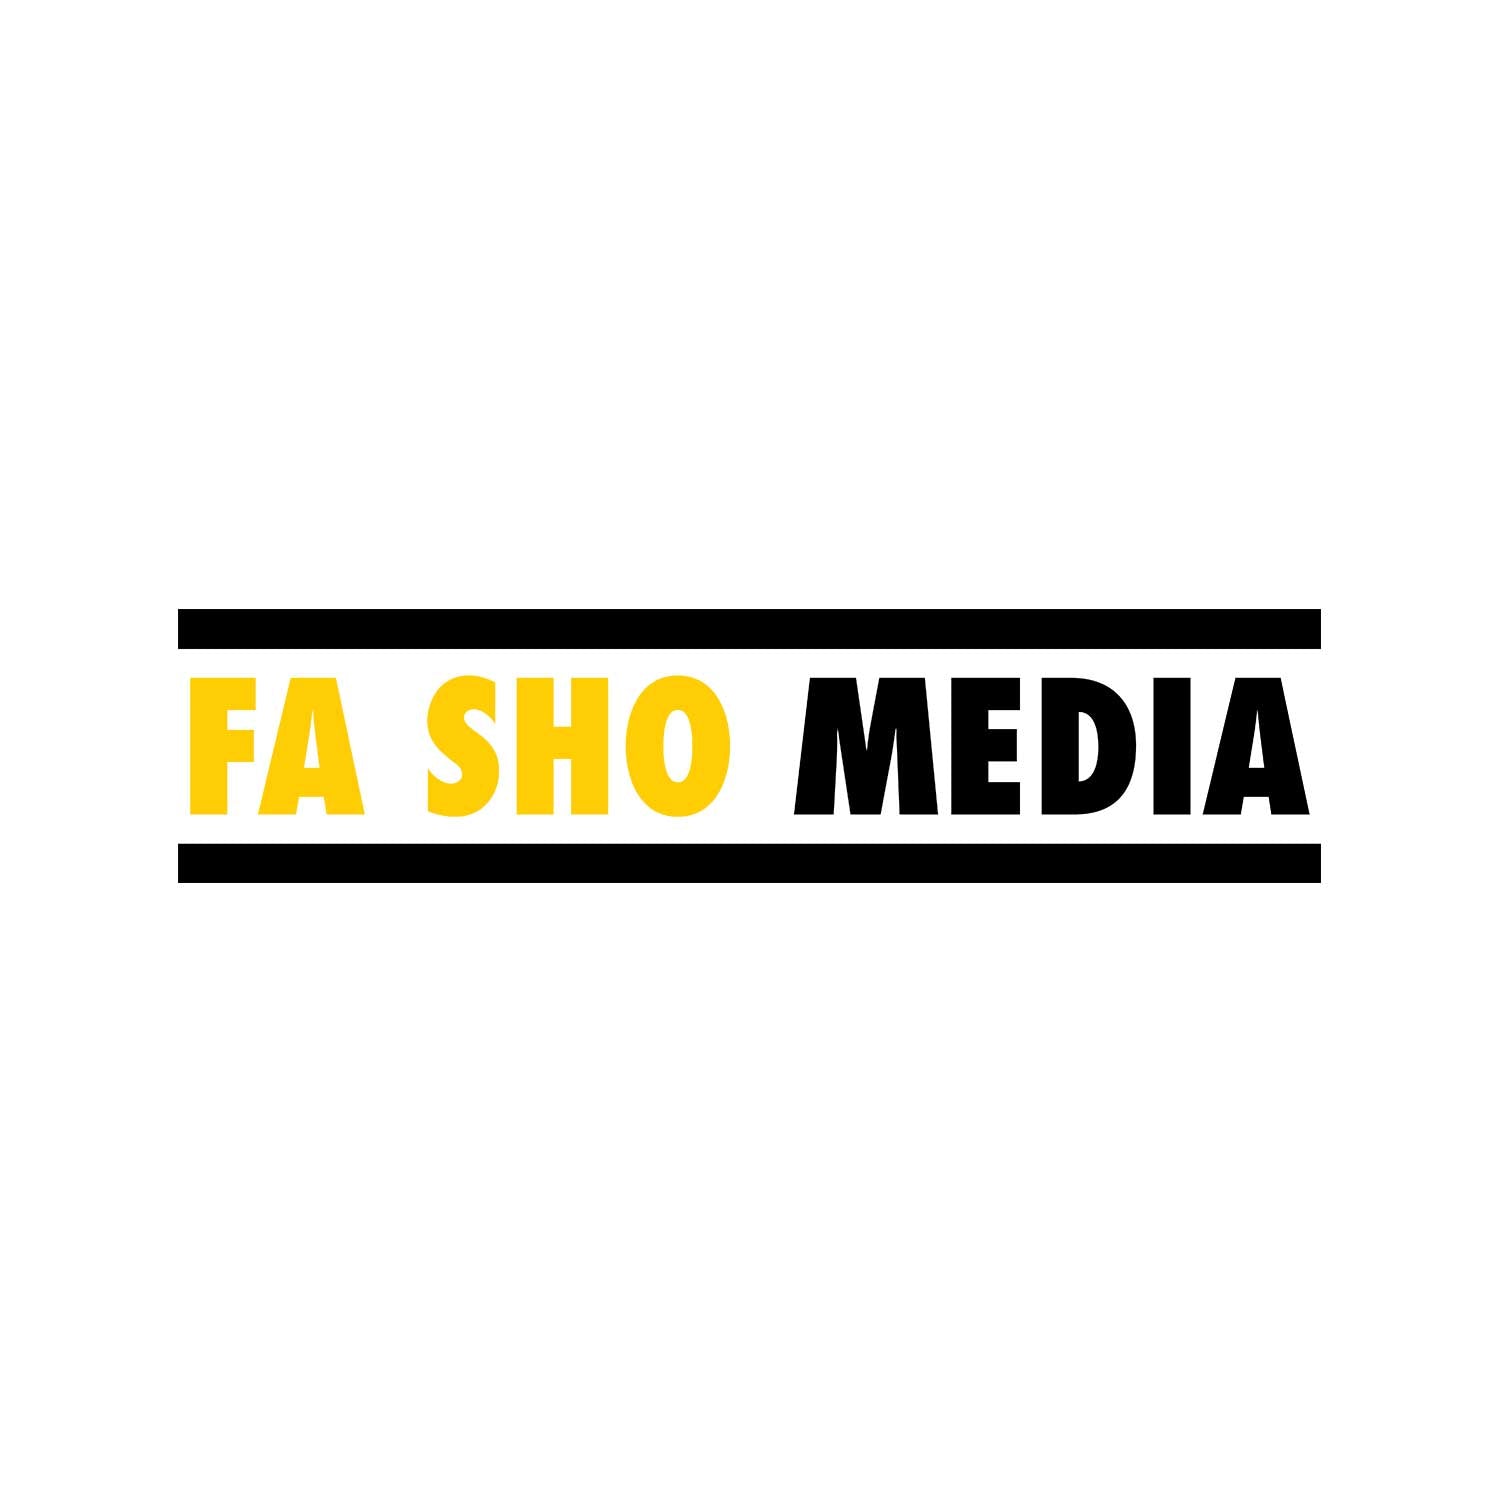 Fa Sho Media Numeral Shirt (Men's)